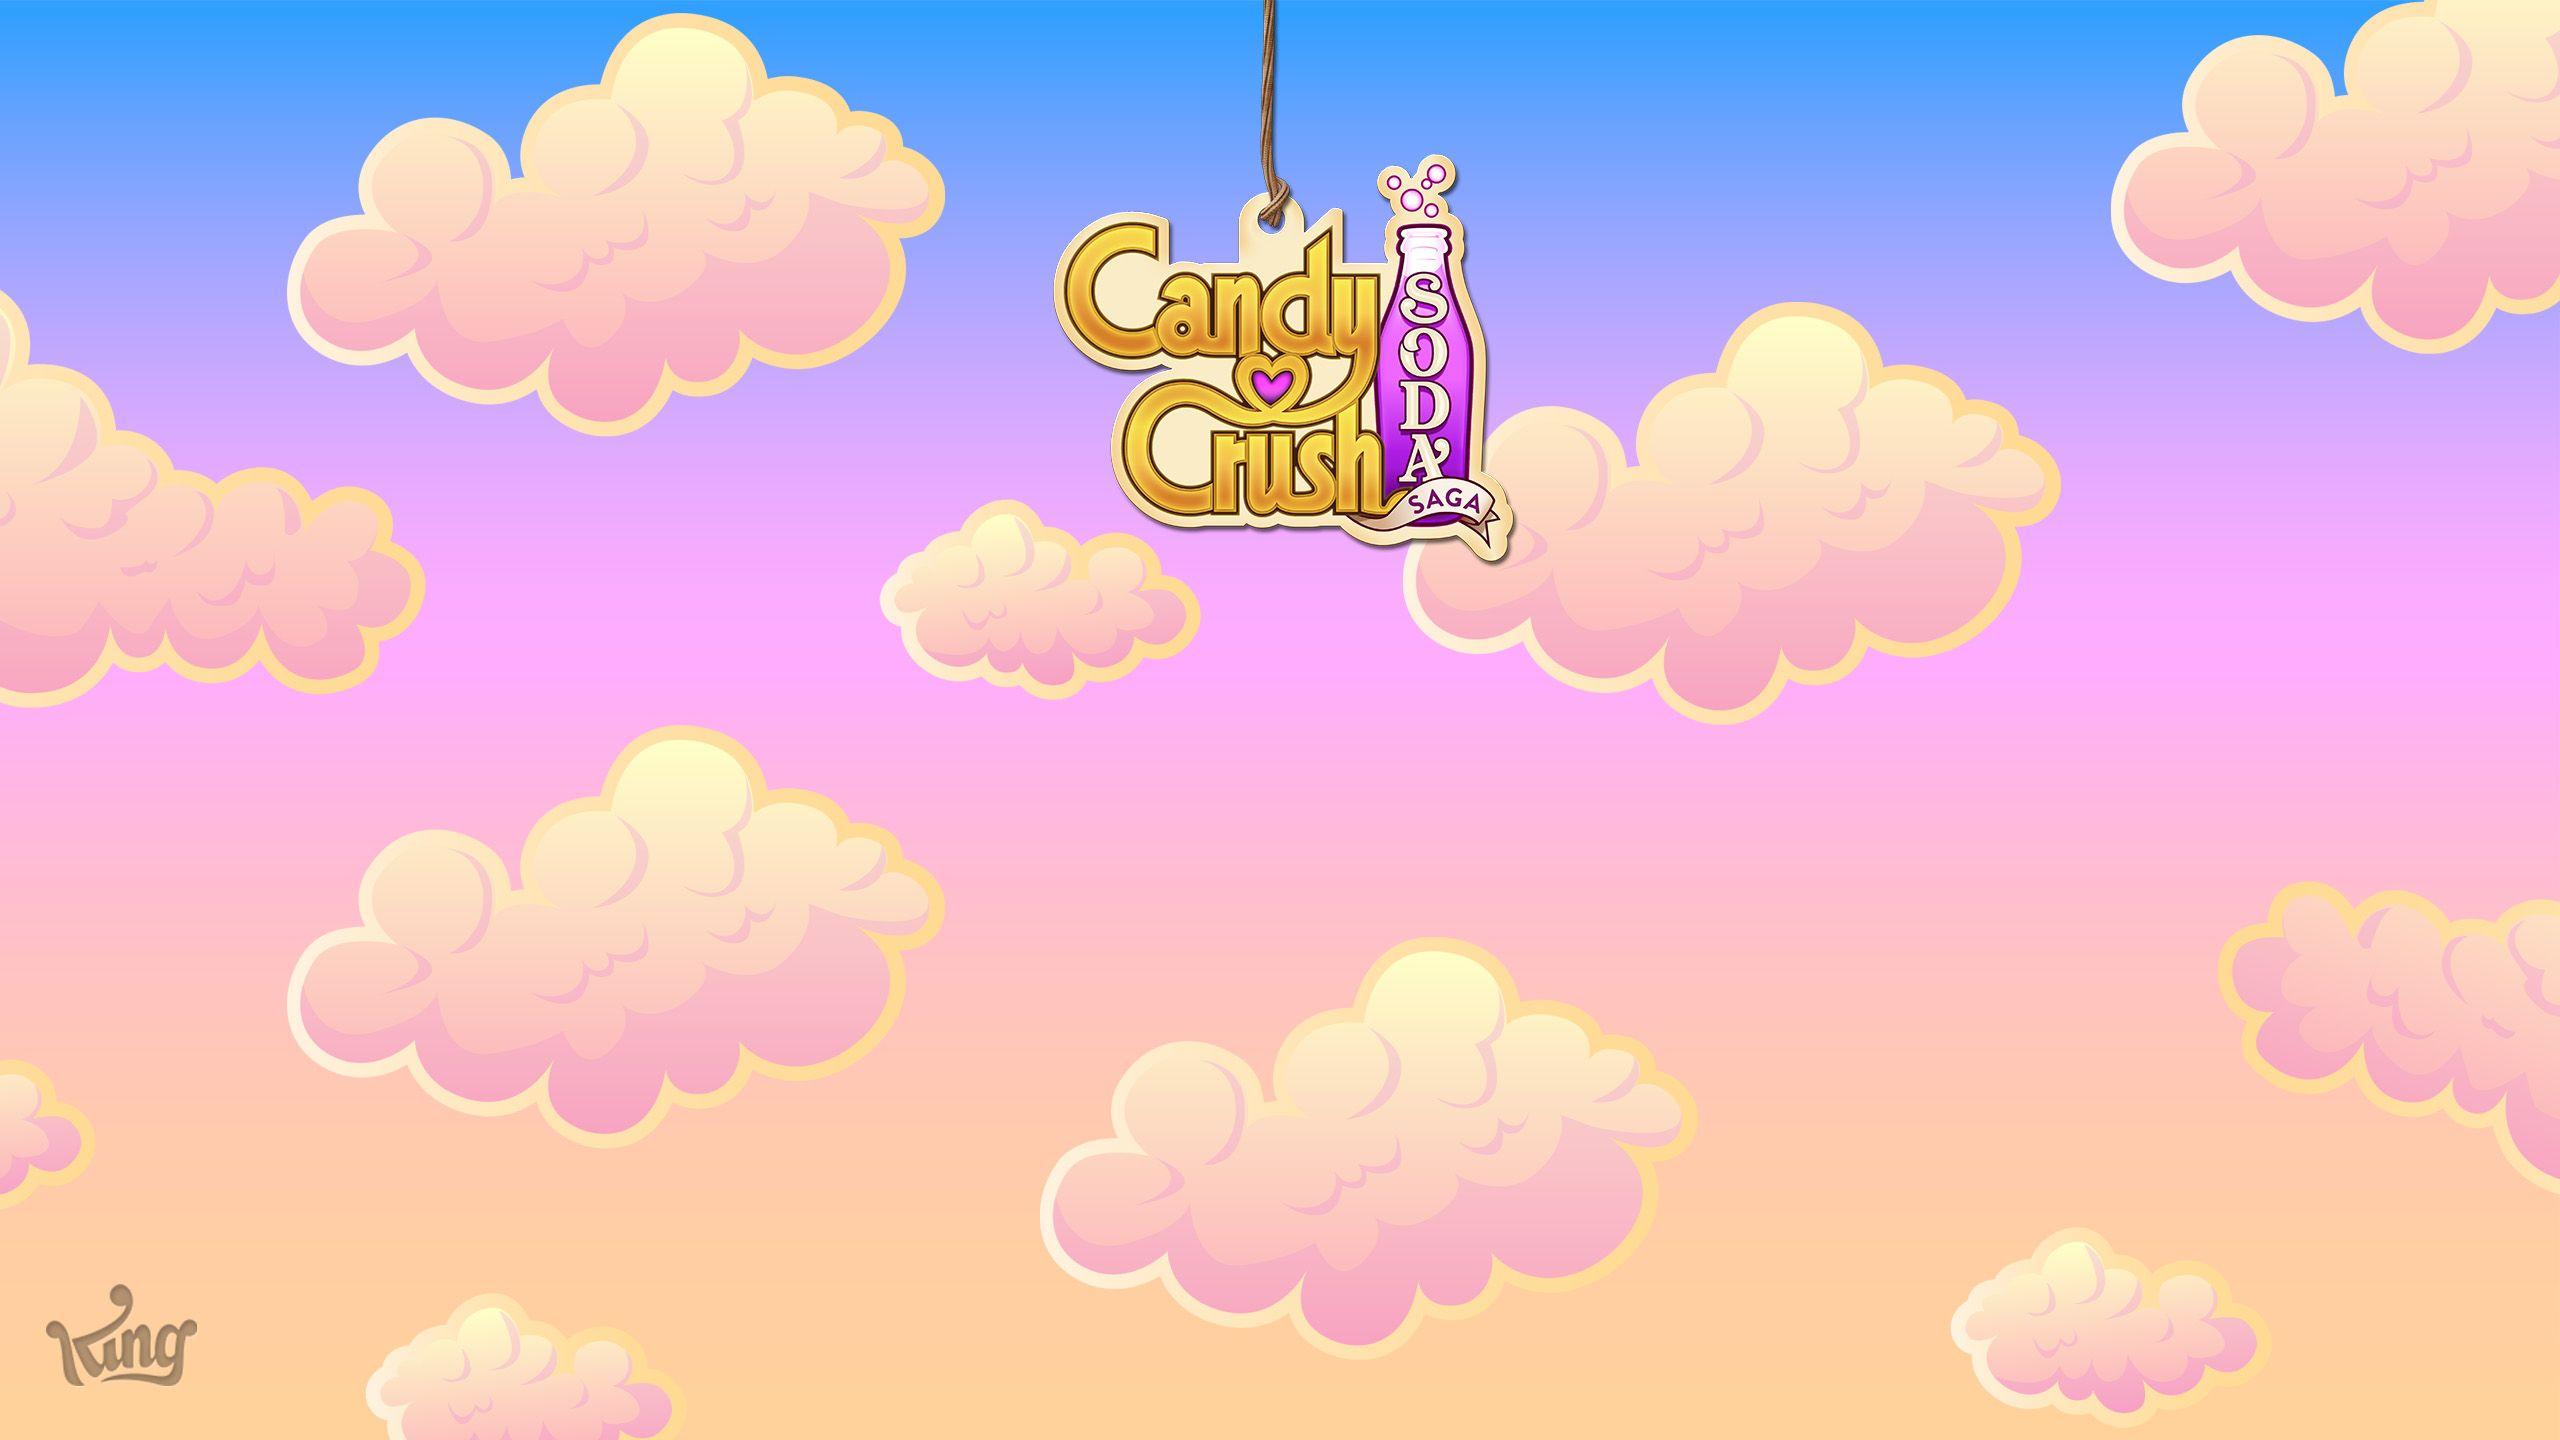 Candy Crush Soda Saga wallapaper Full HD Wallpaper and Background